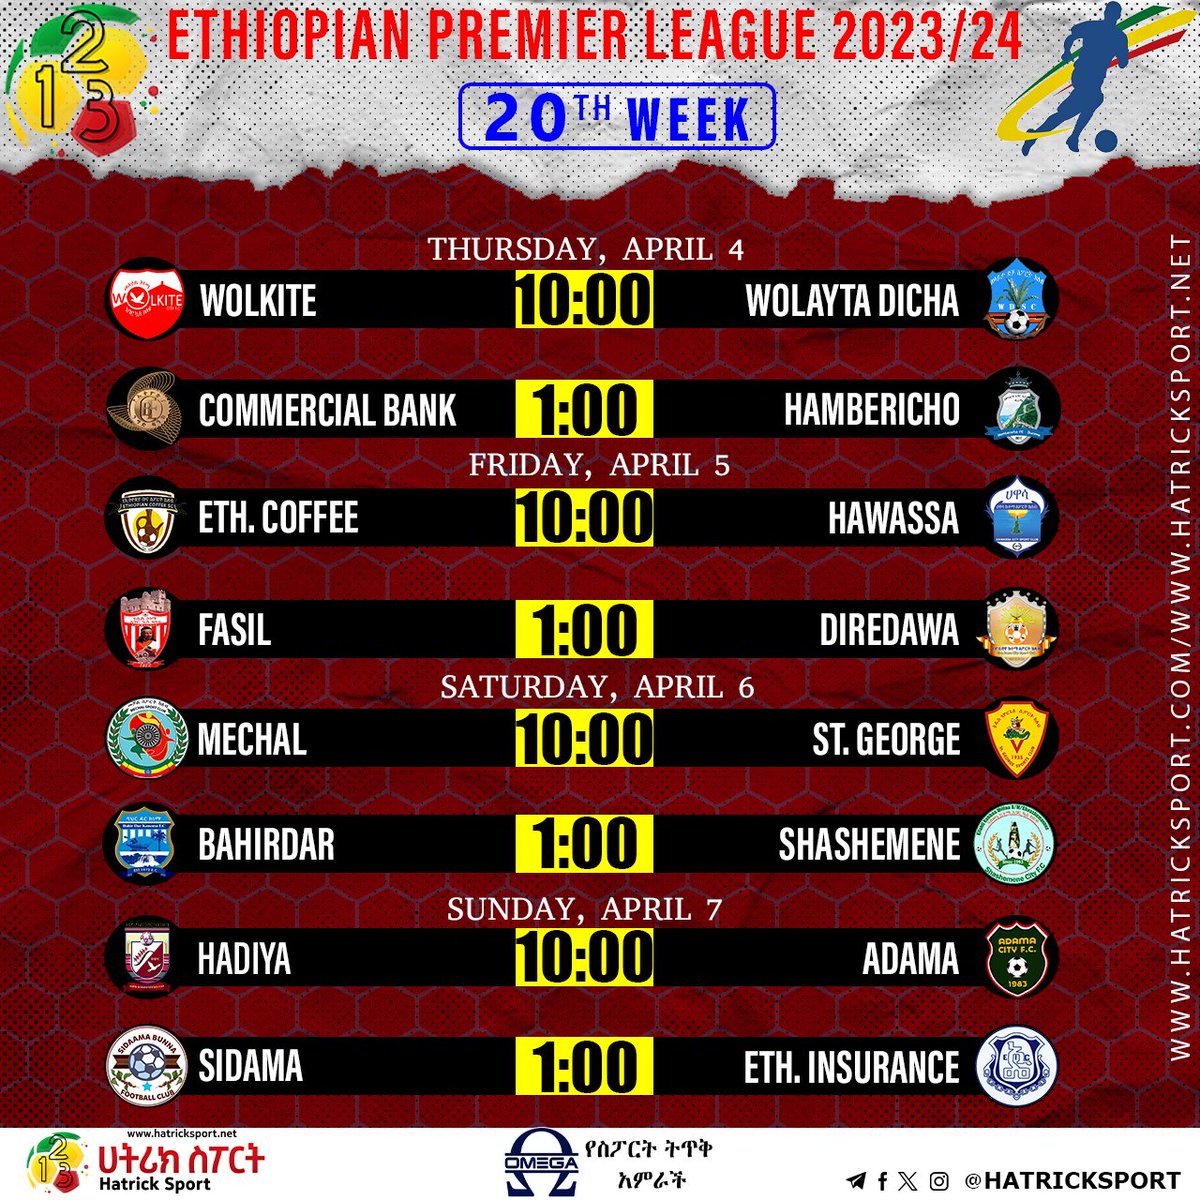 2023/24 Ethiopian Premier League 20th week schedule 🏟 Dredawa Stadium!! #EthPL🇪🇹 #ssfootball